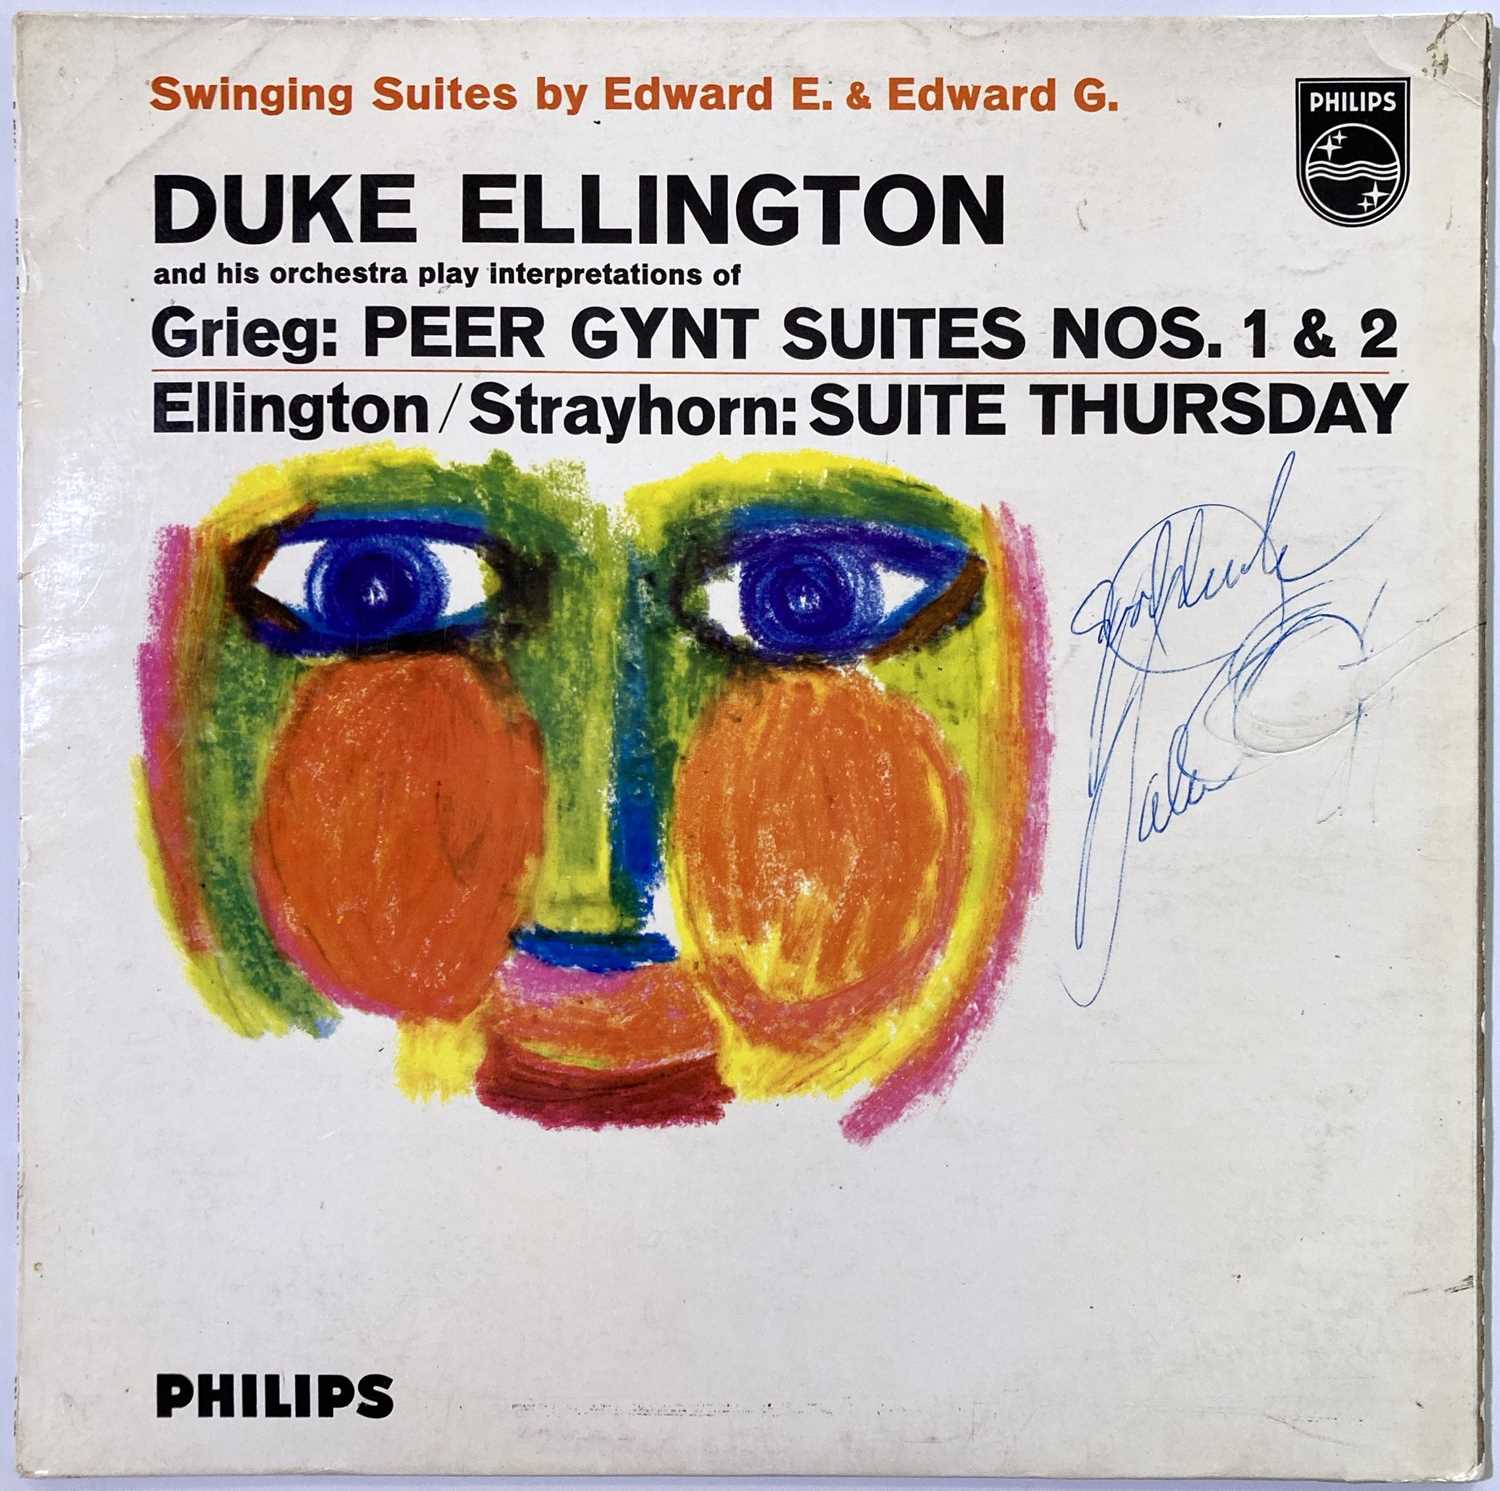 SIGNED LP - DUKE ELLINGTON. - Image 4 of 4